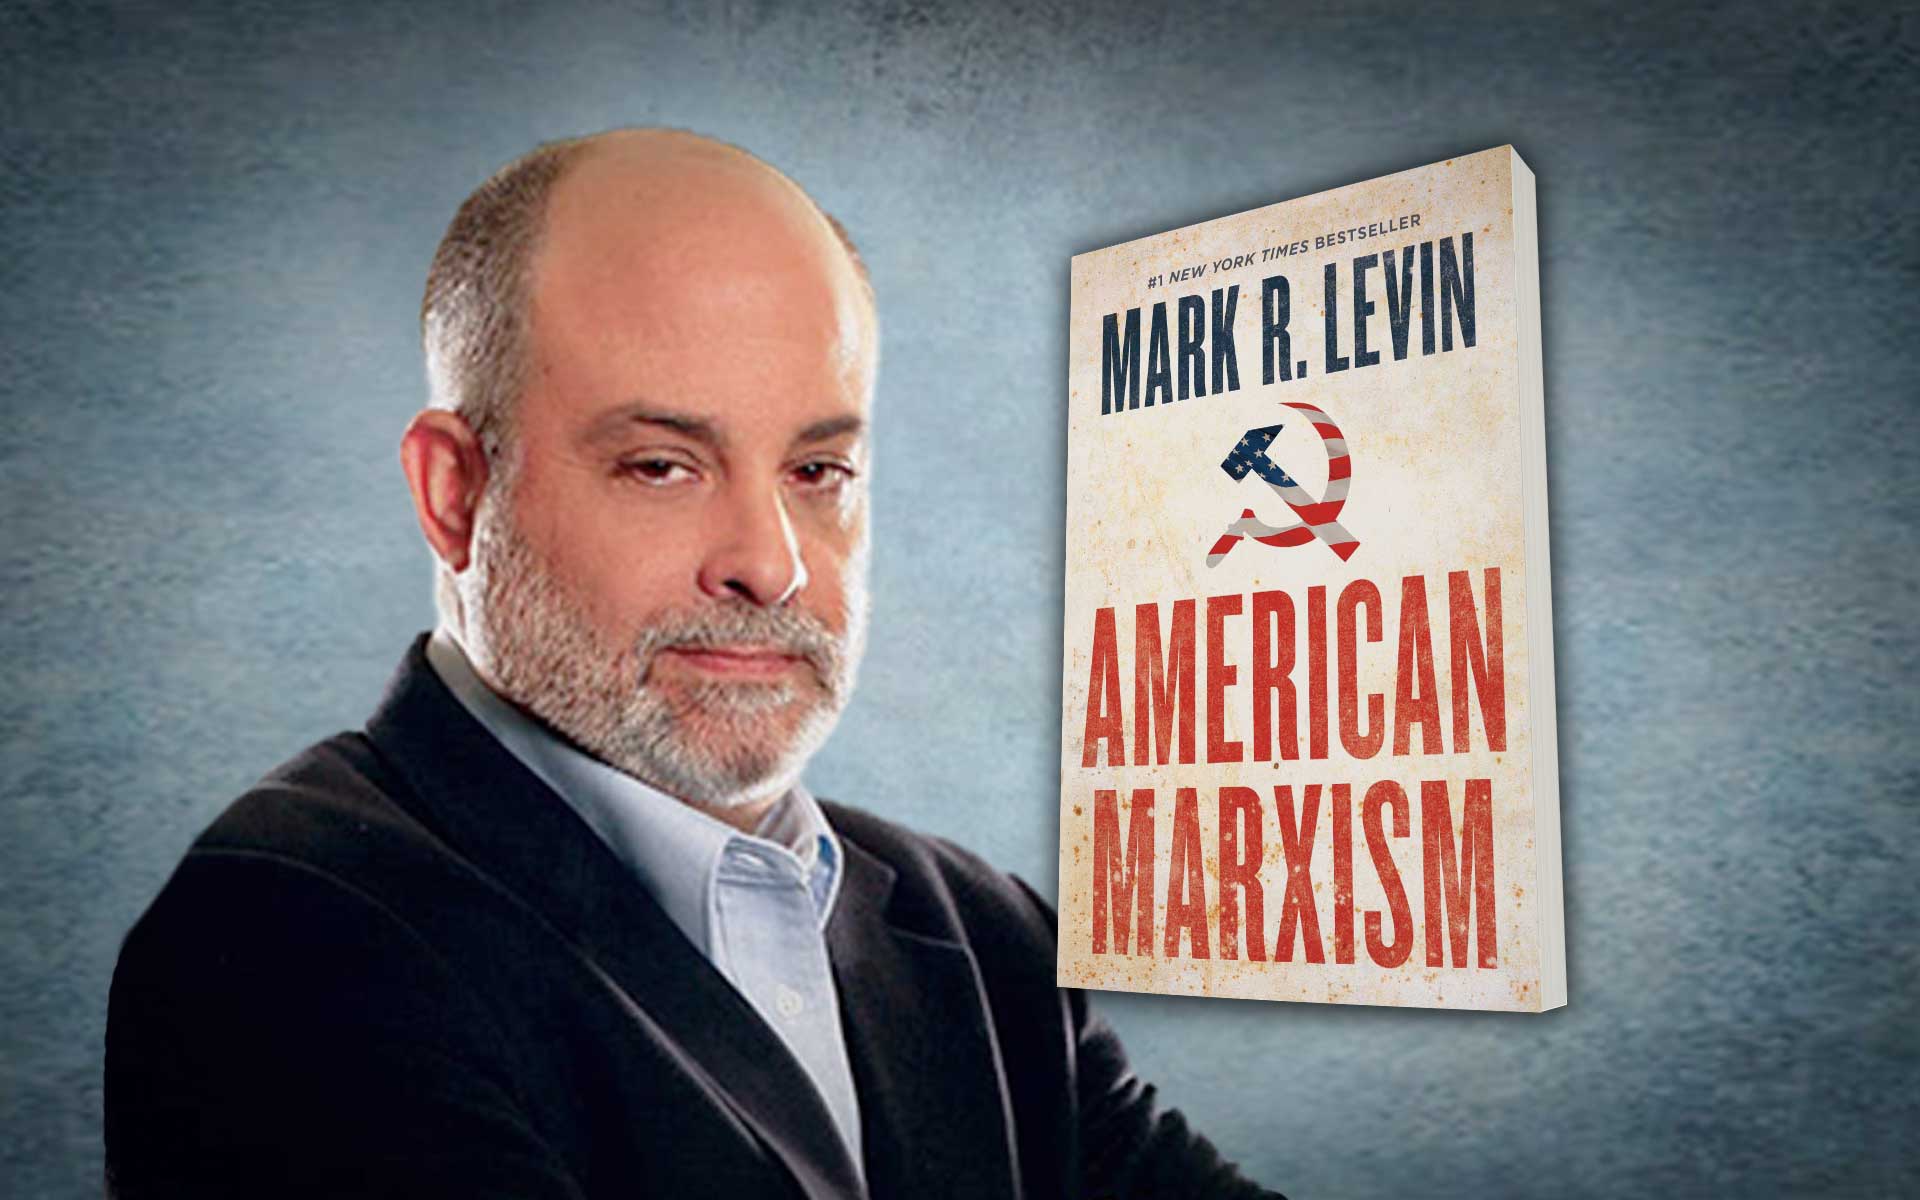 American Marxism - Part 1